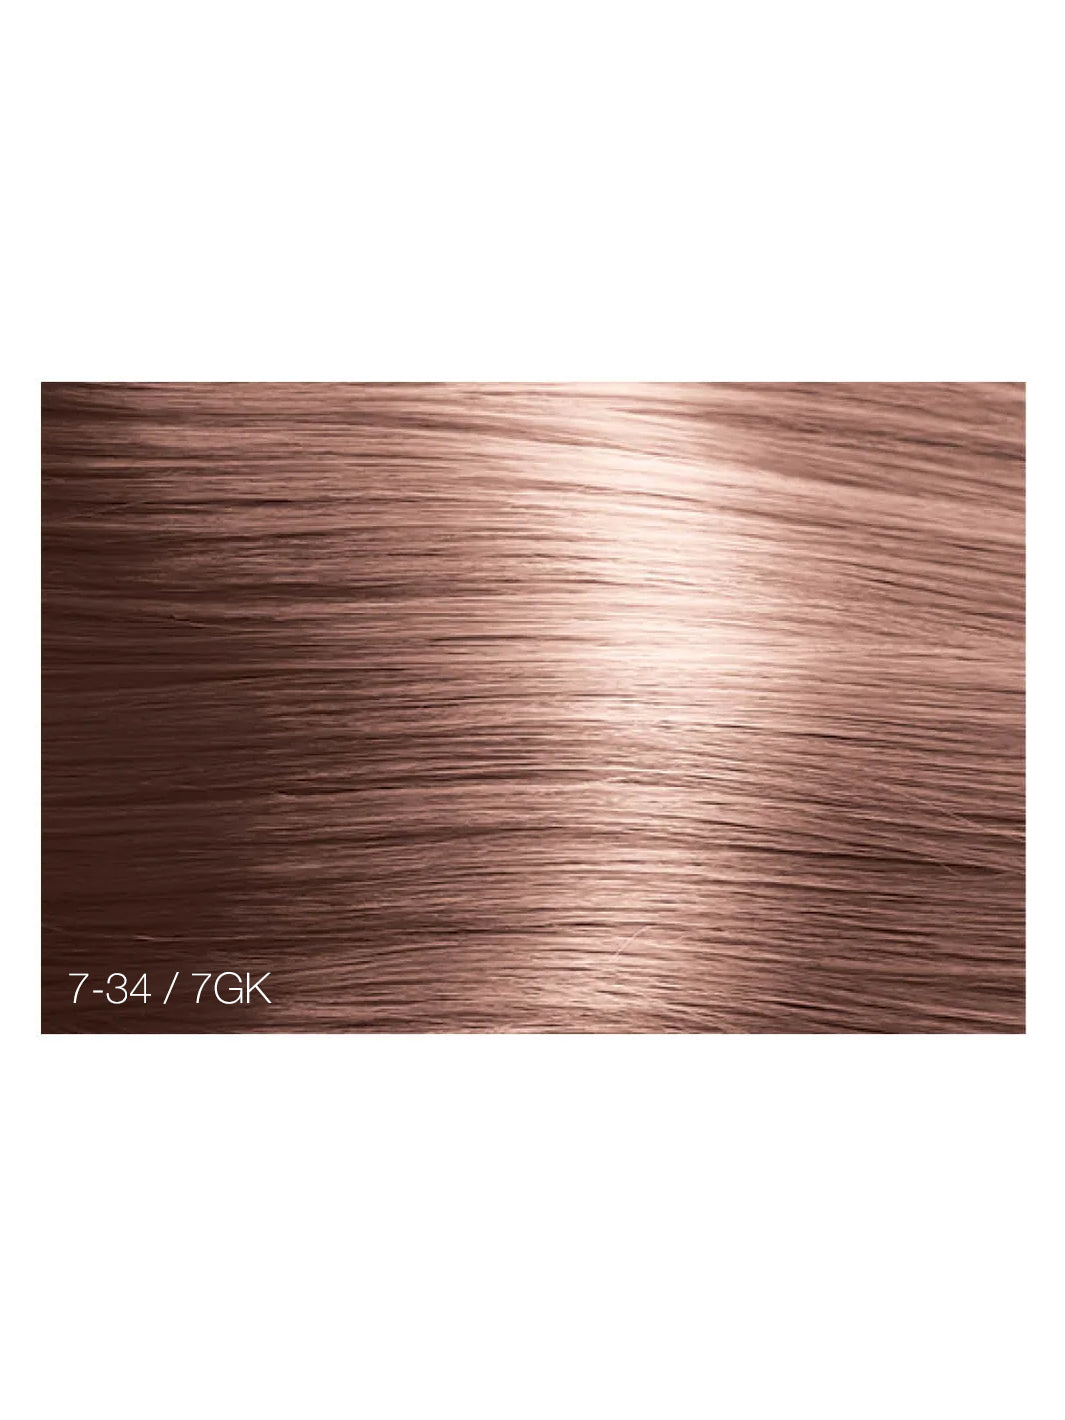 Calura Permanent Golden Copper - 34/GK